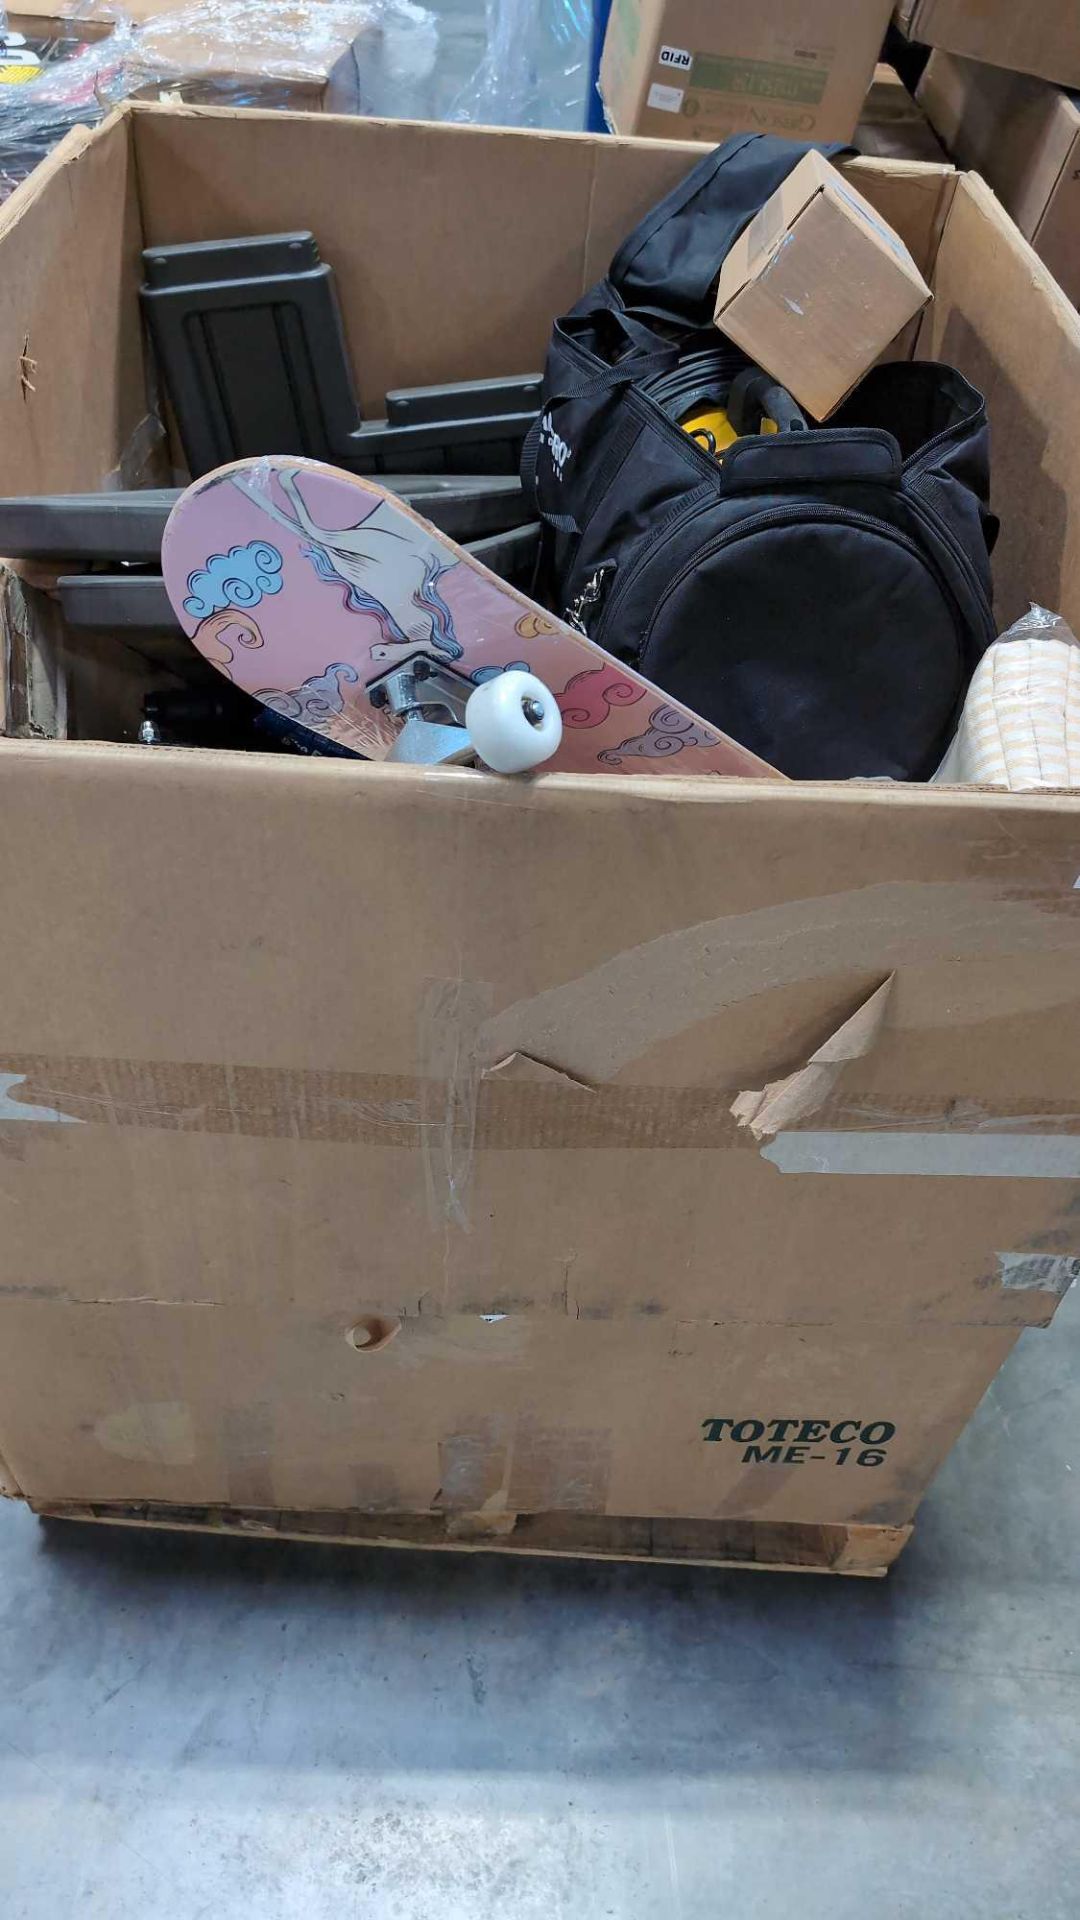 razor electric scooter, hilana, allegro portable ventilator 12-in axle blower, skateboard - Image 9 of 9